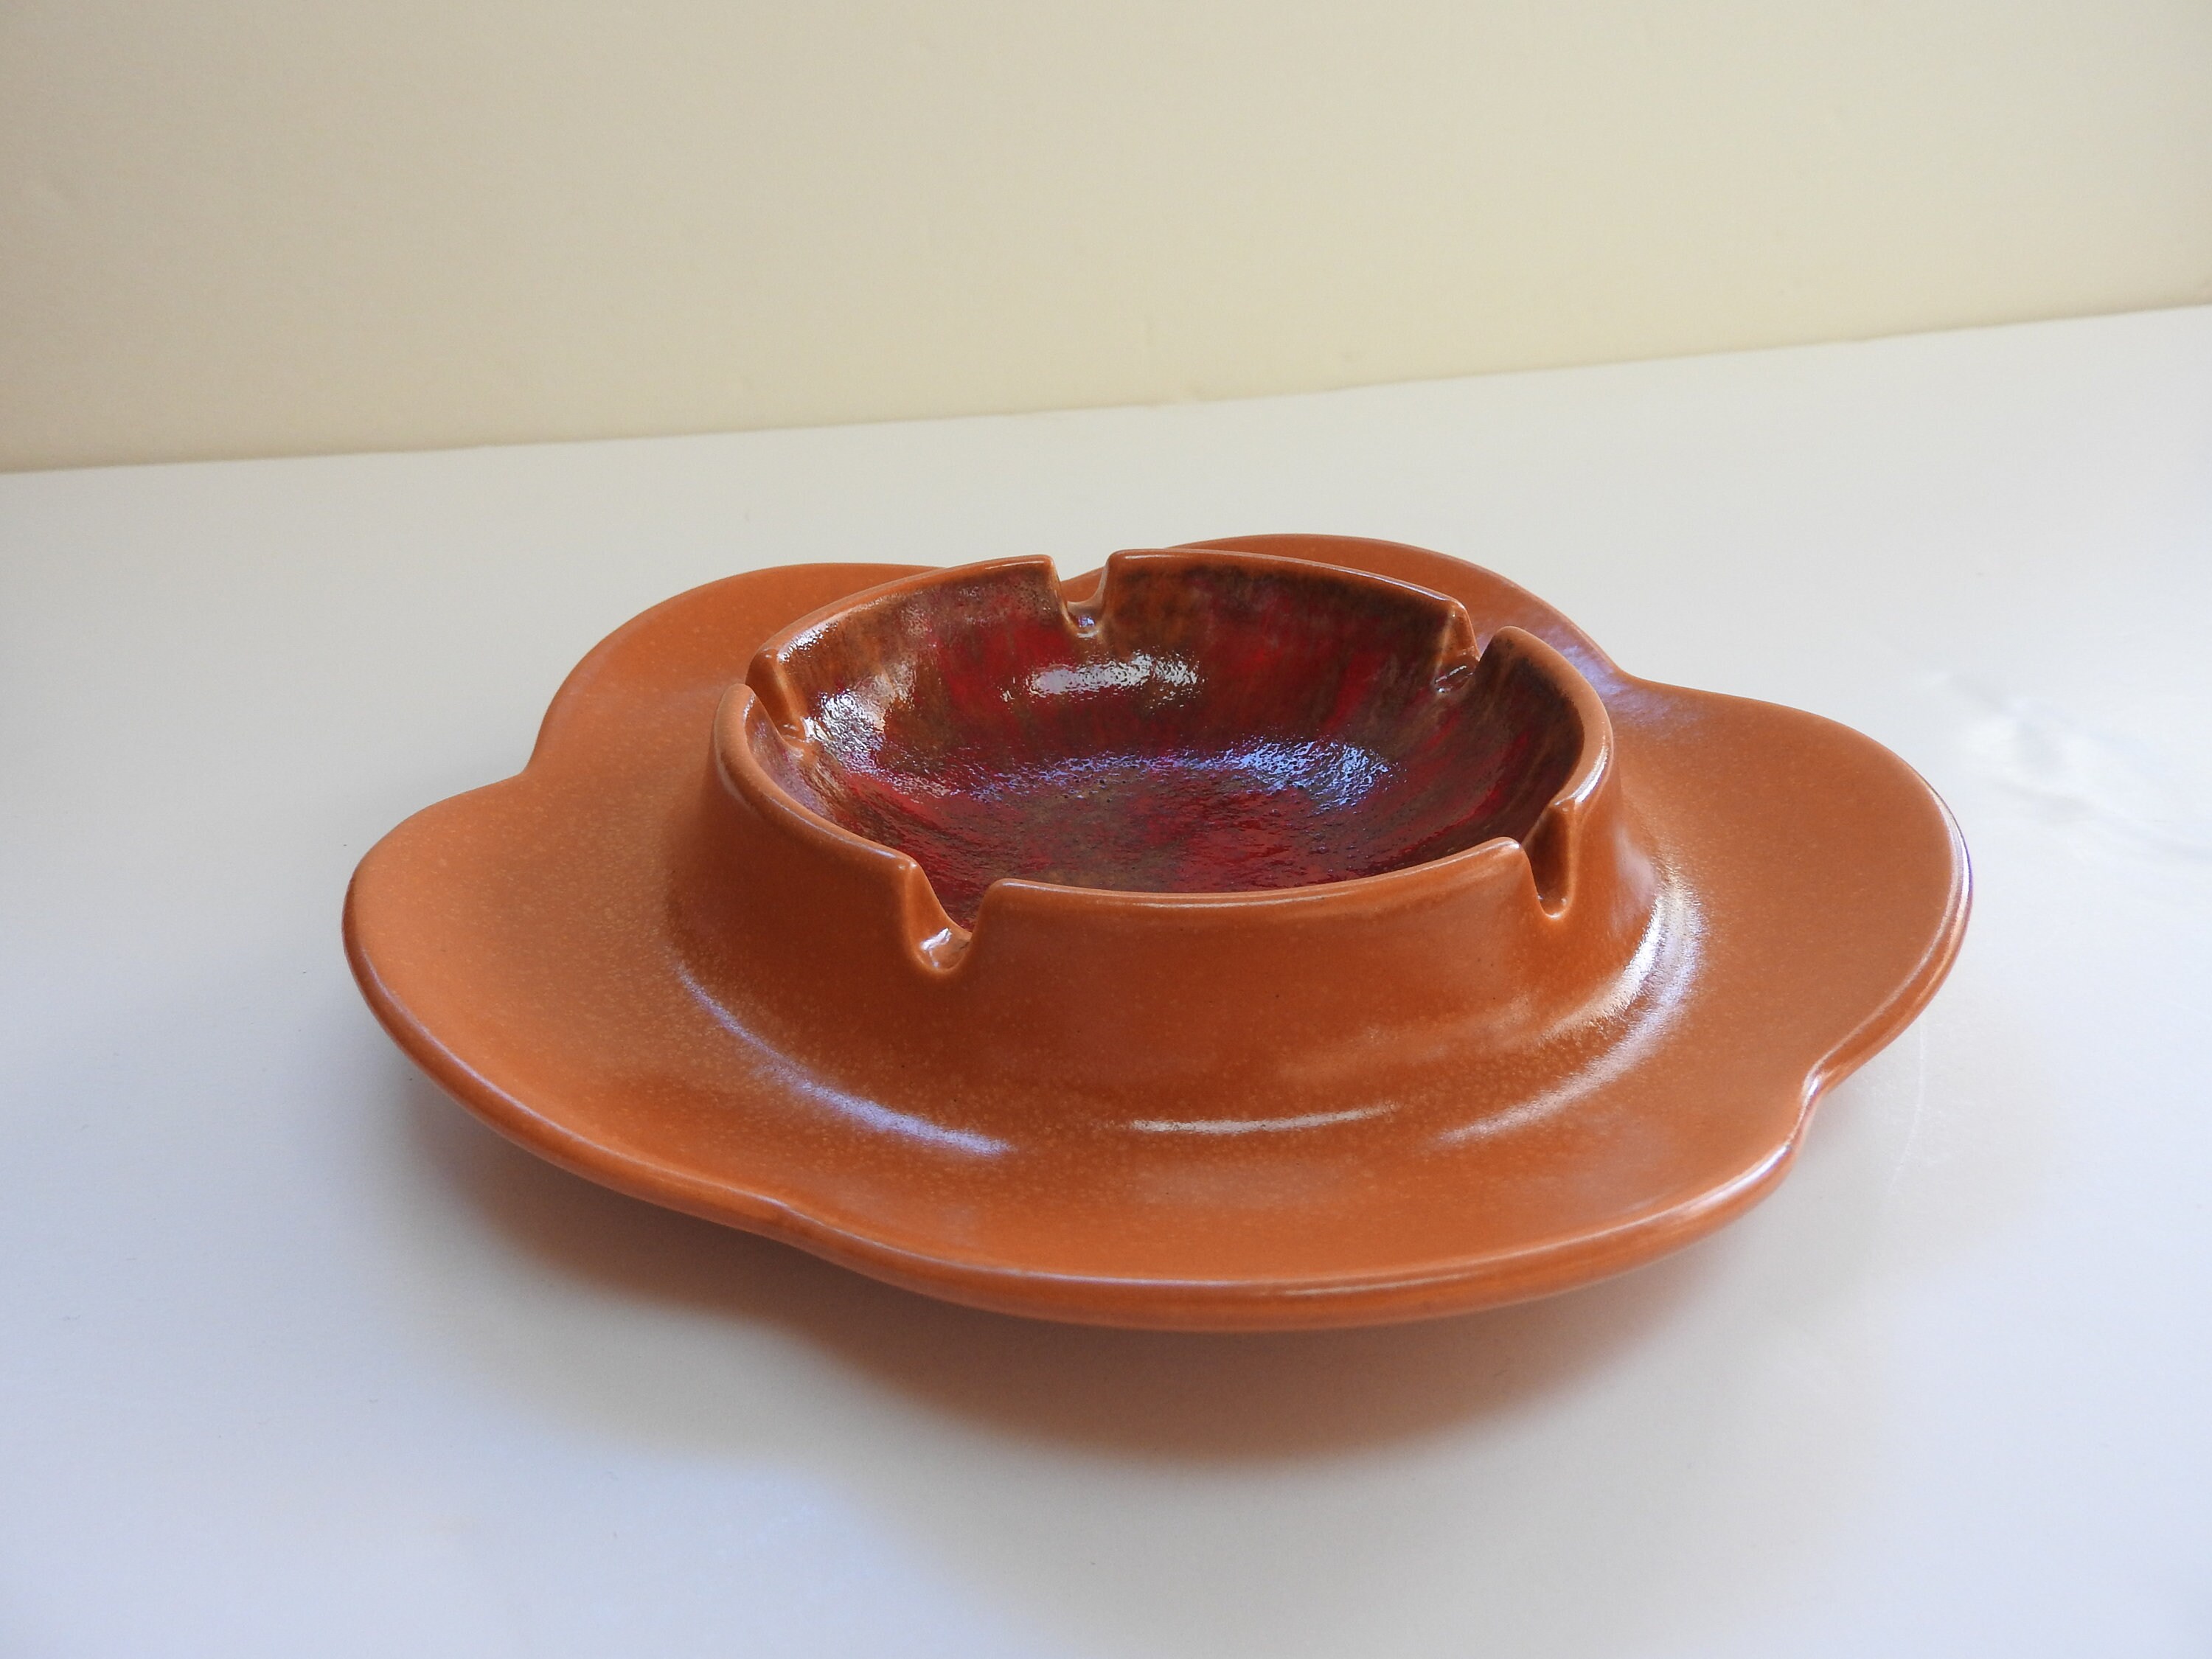 Ashtray bowl - Etna fire style - Sicily Lover